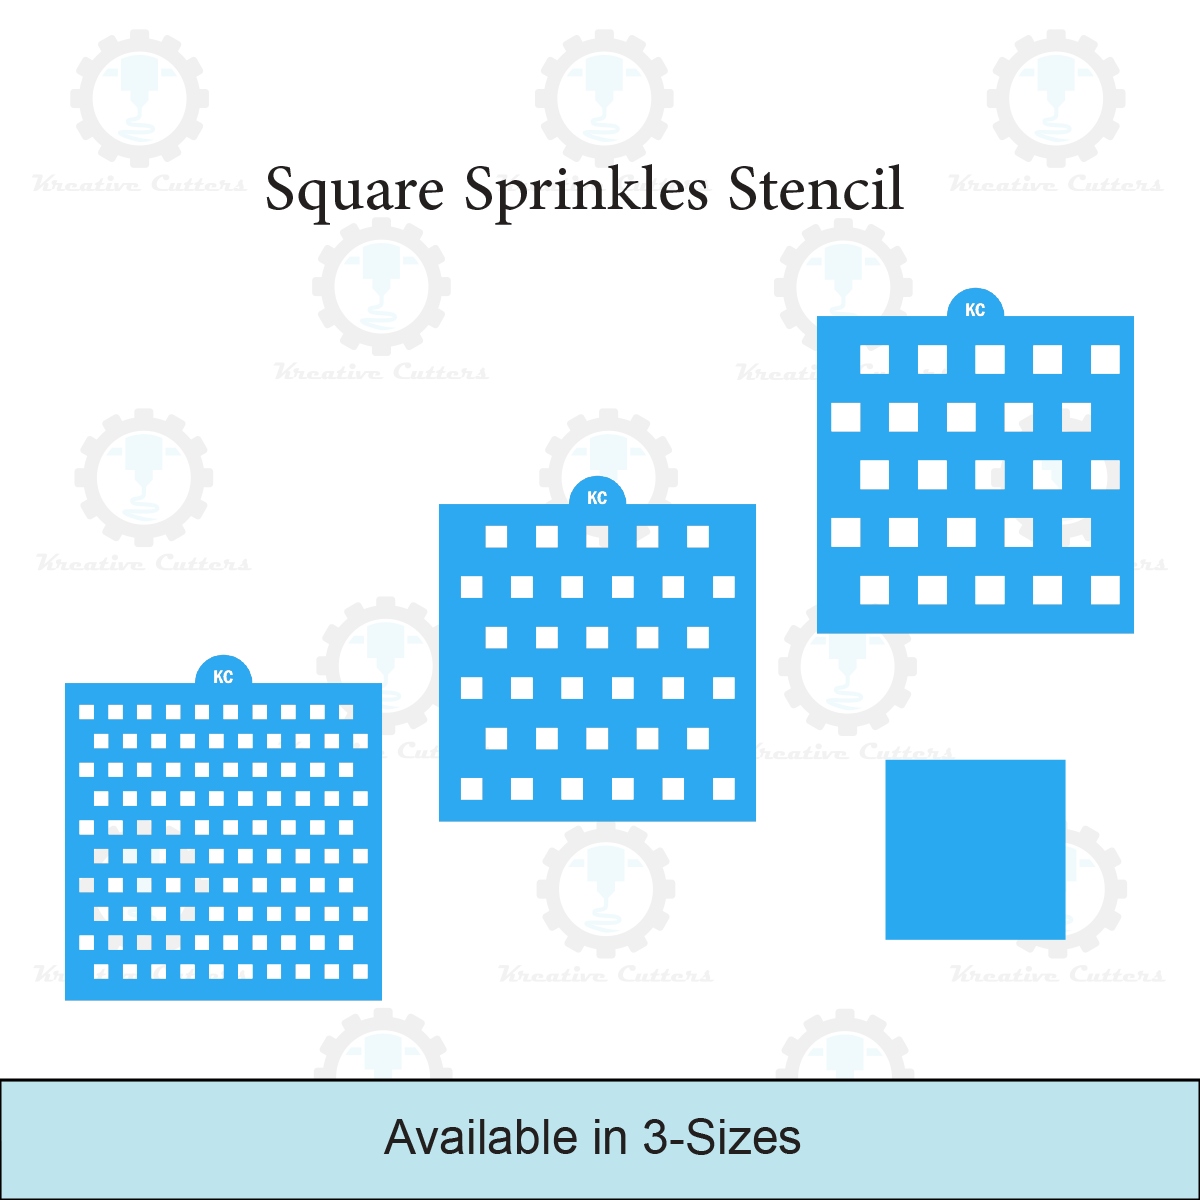 Square Sprinkles Stencil | 3D Printed, Cookie, Cake, & Cupcake, Decorating Stencils